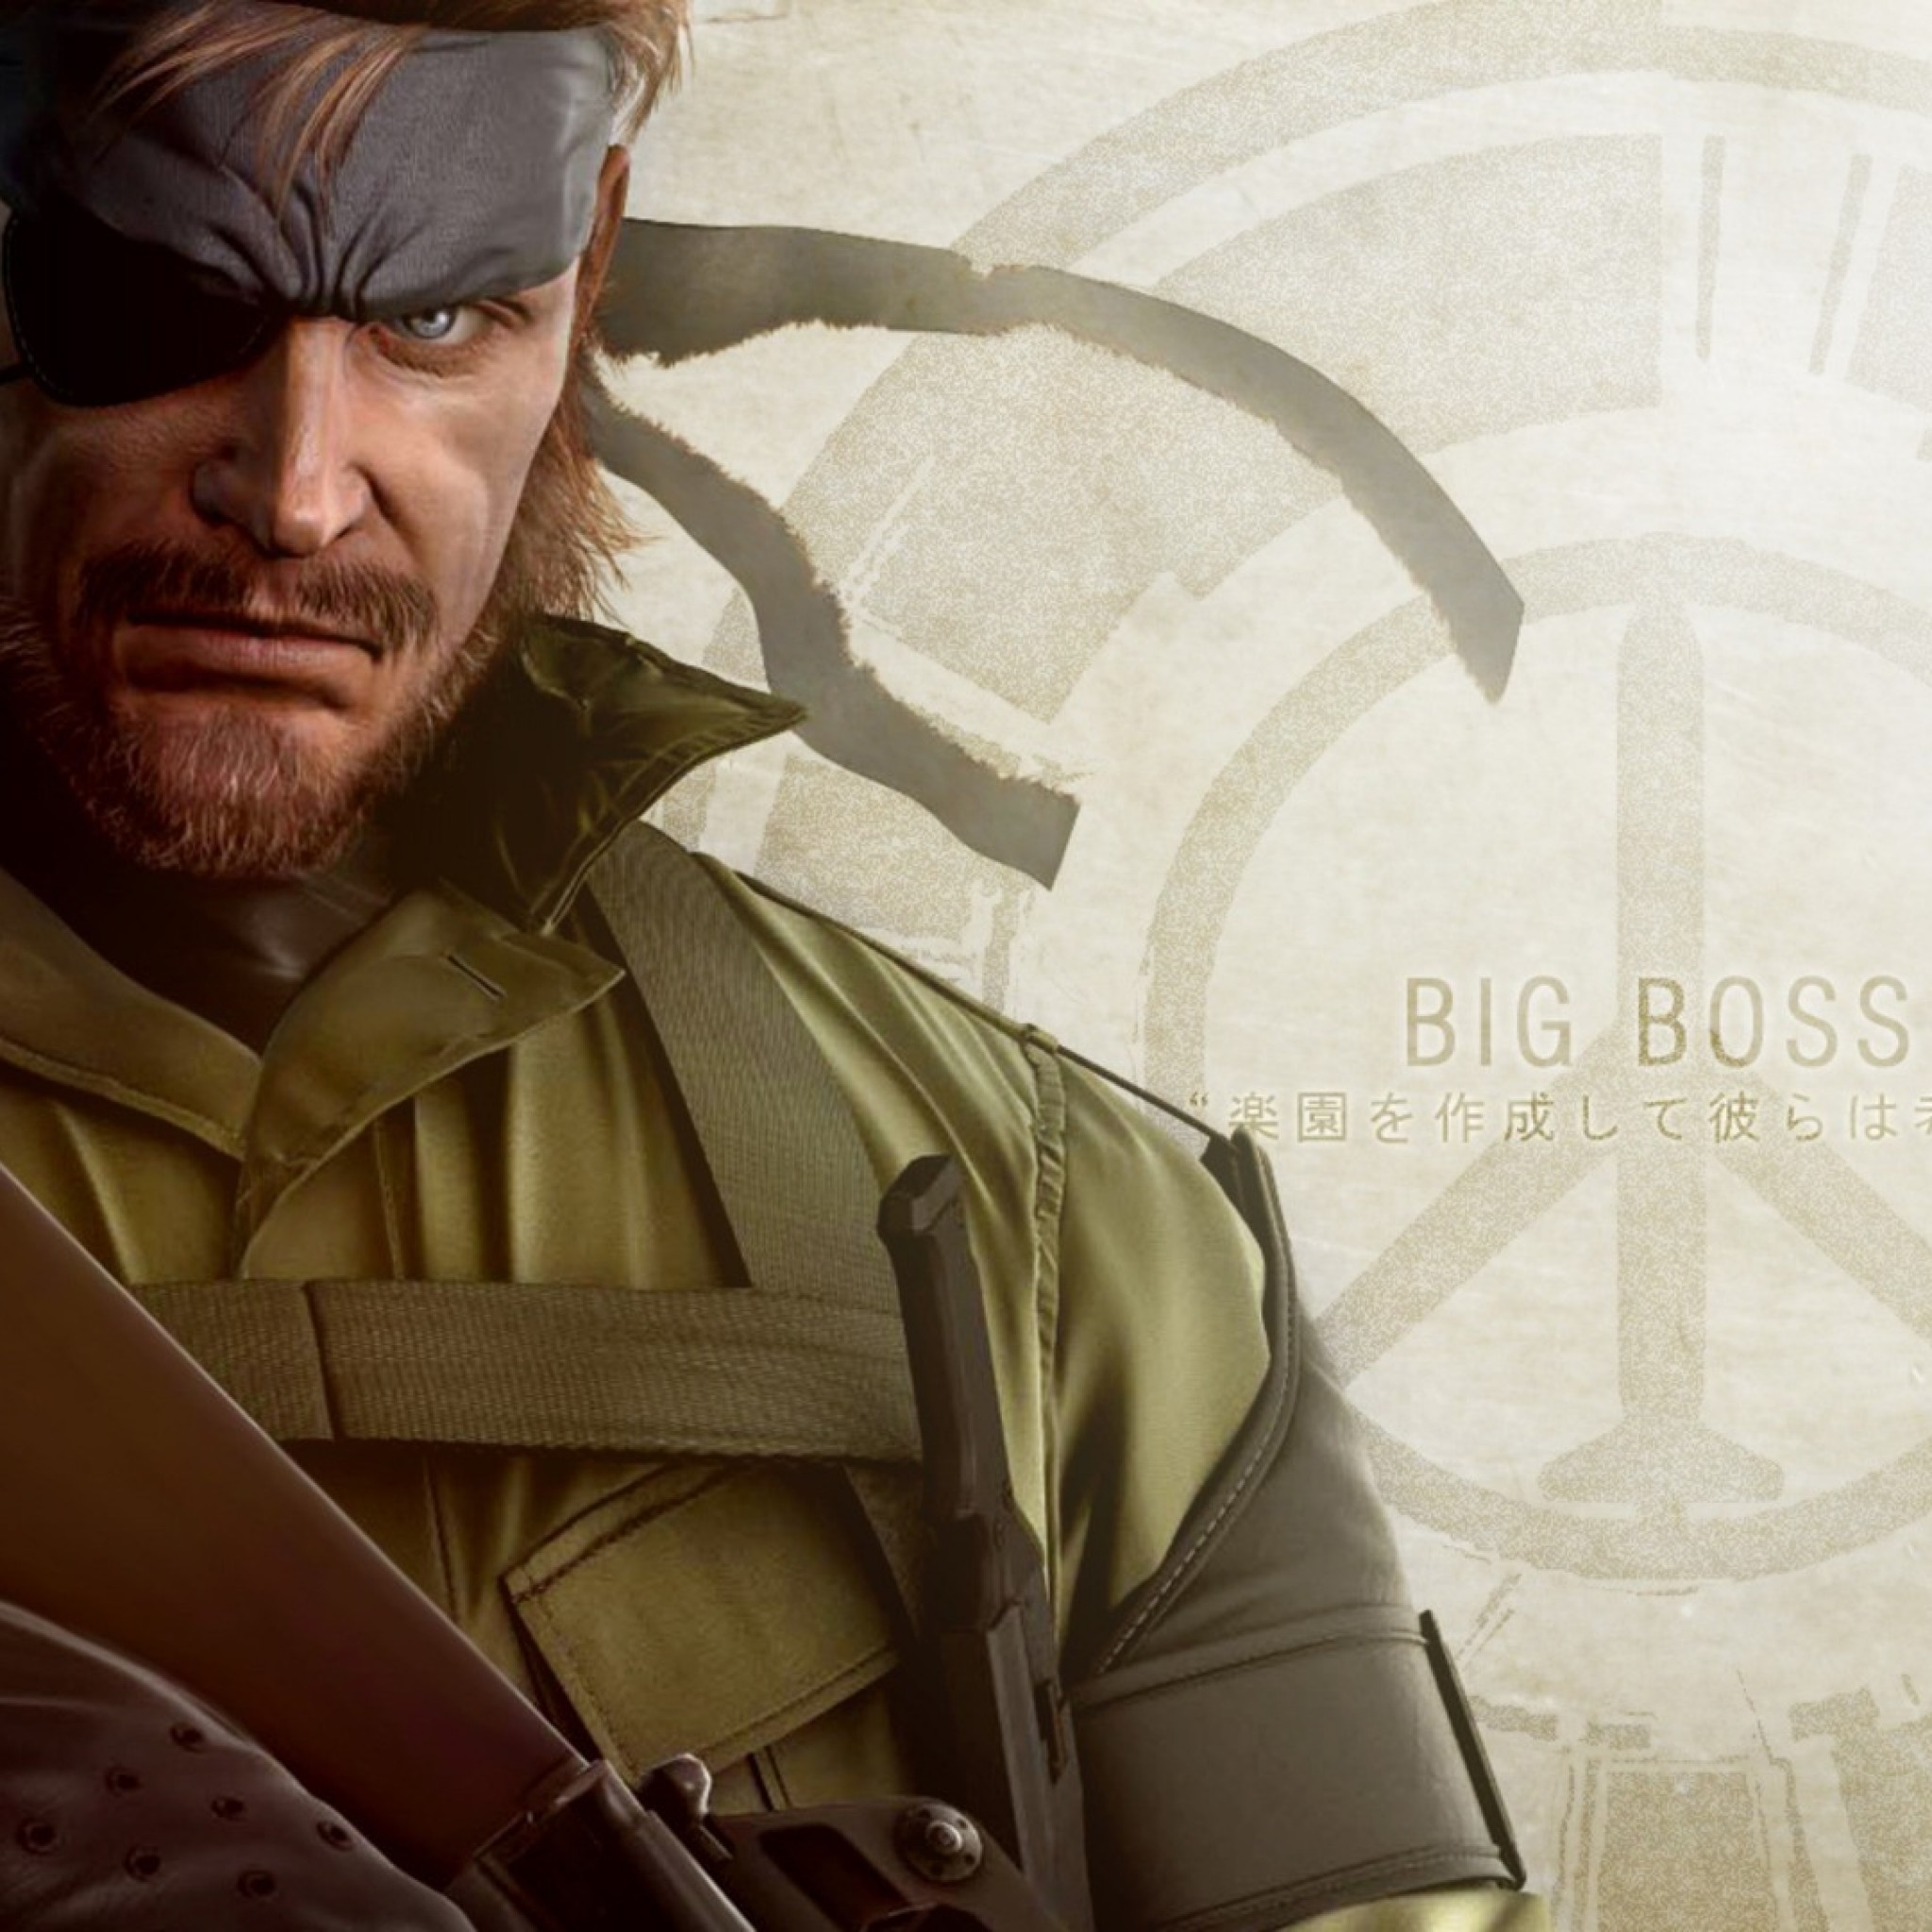 Her big boss. Big Boss Metal Gear. Metal Gear Solid big Boss. Биг босс Metal Gear на аватарку. Повязка Биг босса.